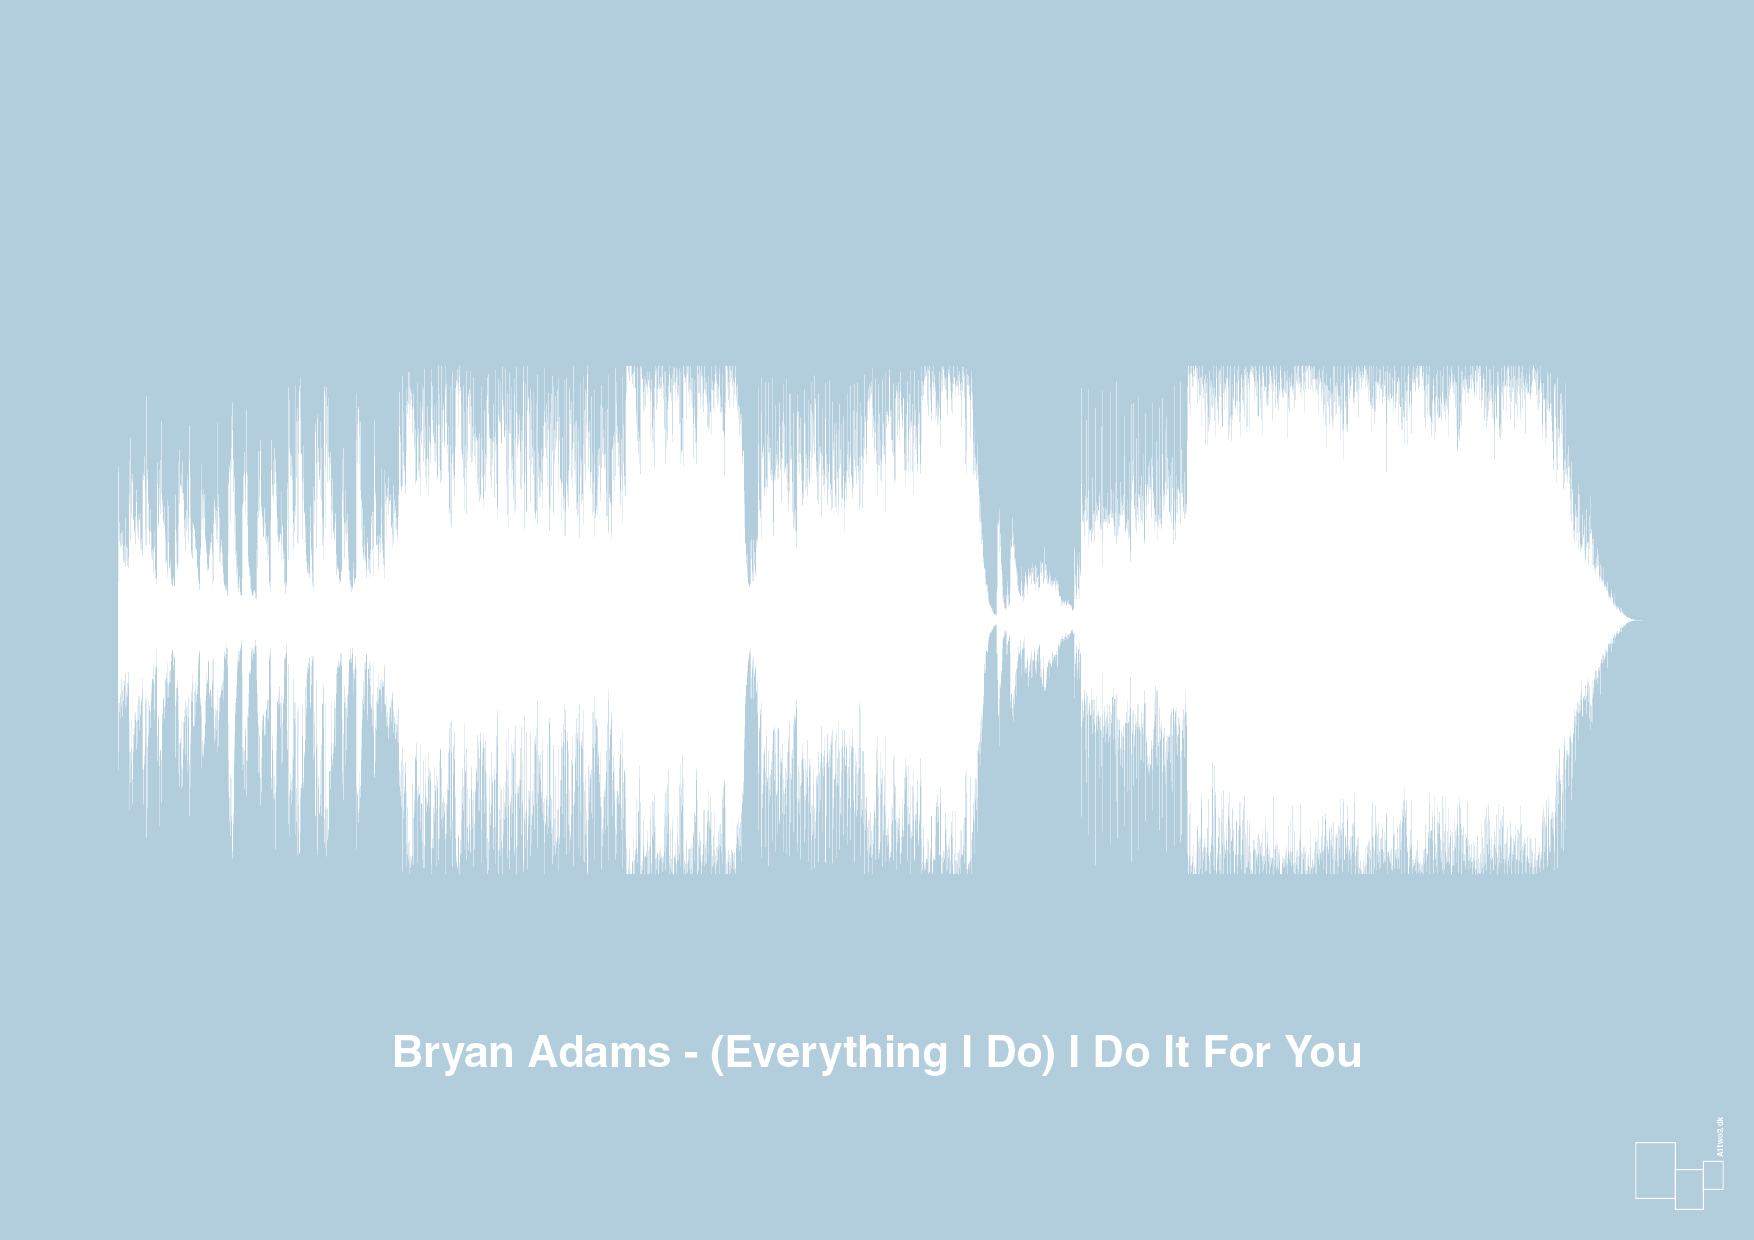 bryan adams - (everything i do) i do it for you - Plakat med Musik i Heavenly Blue